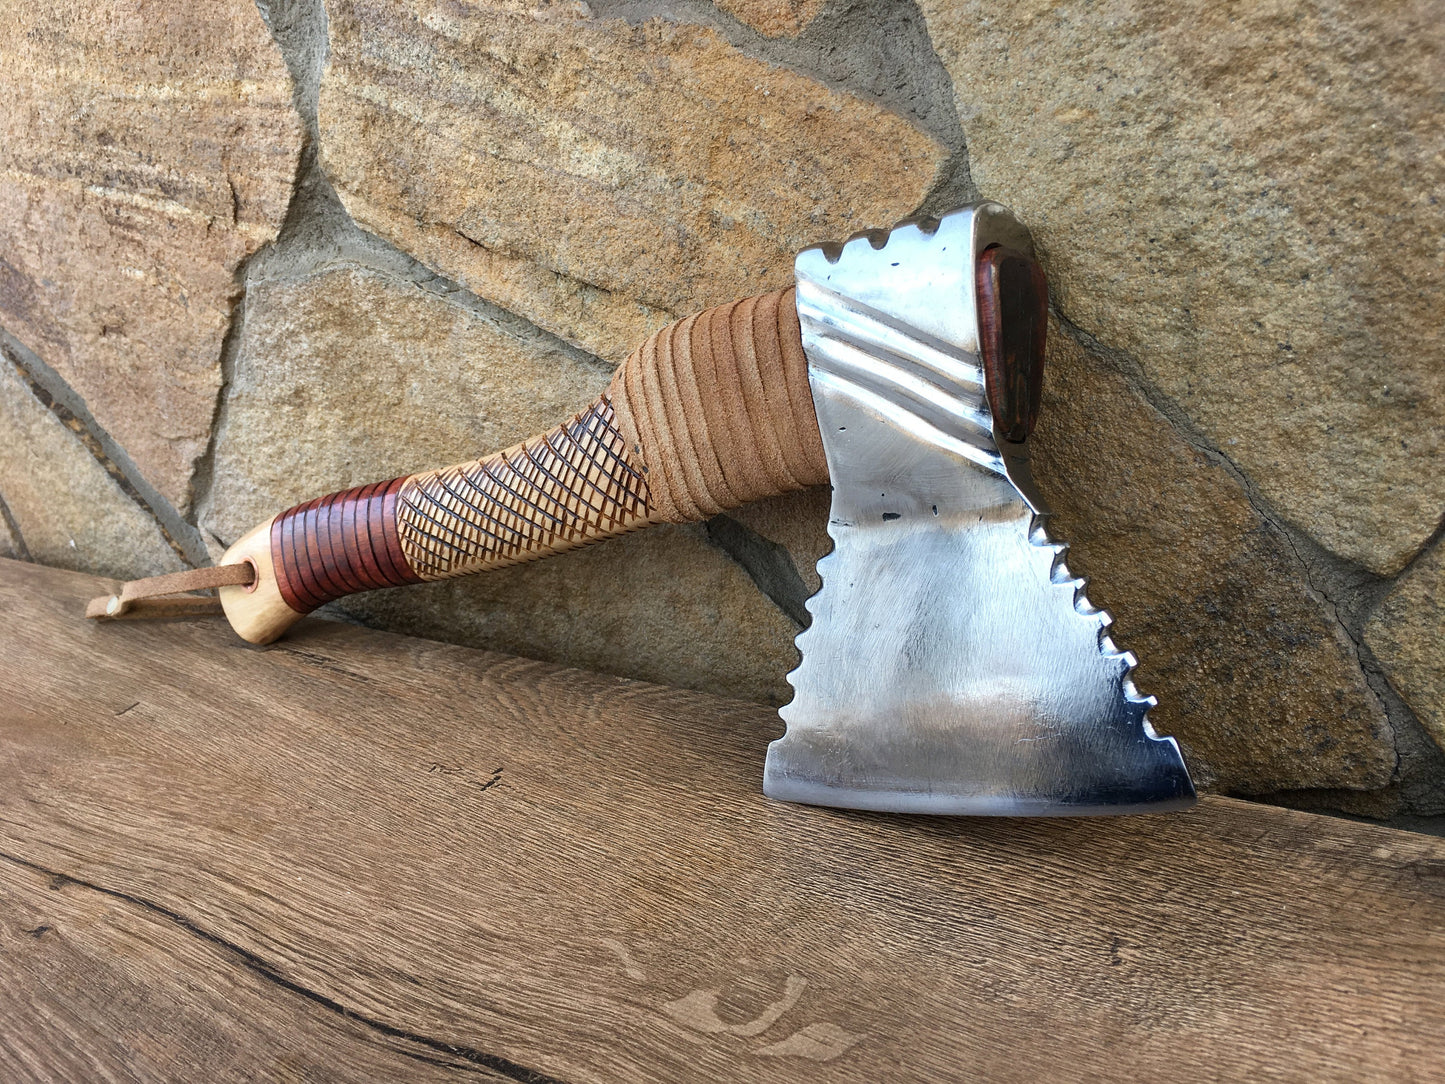 Viking axe, hatchet, tomahawk, axe, mens gift, viking, iron anniversary, bearded axe, metal art, wooden art, gift for men, throwing axe,axes